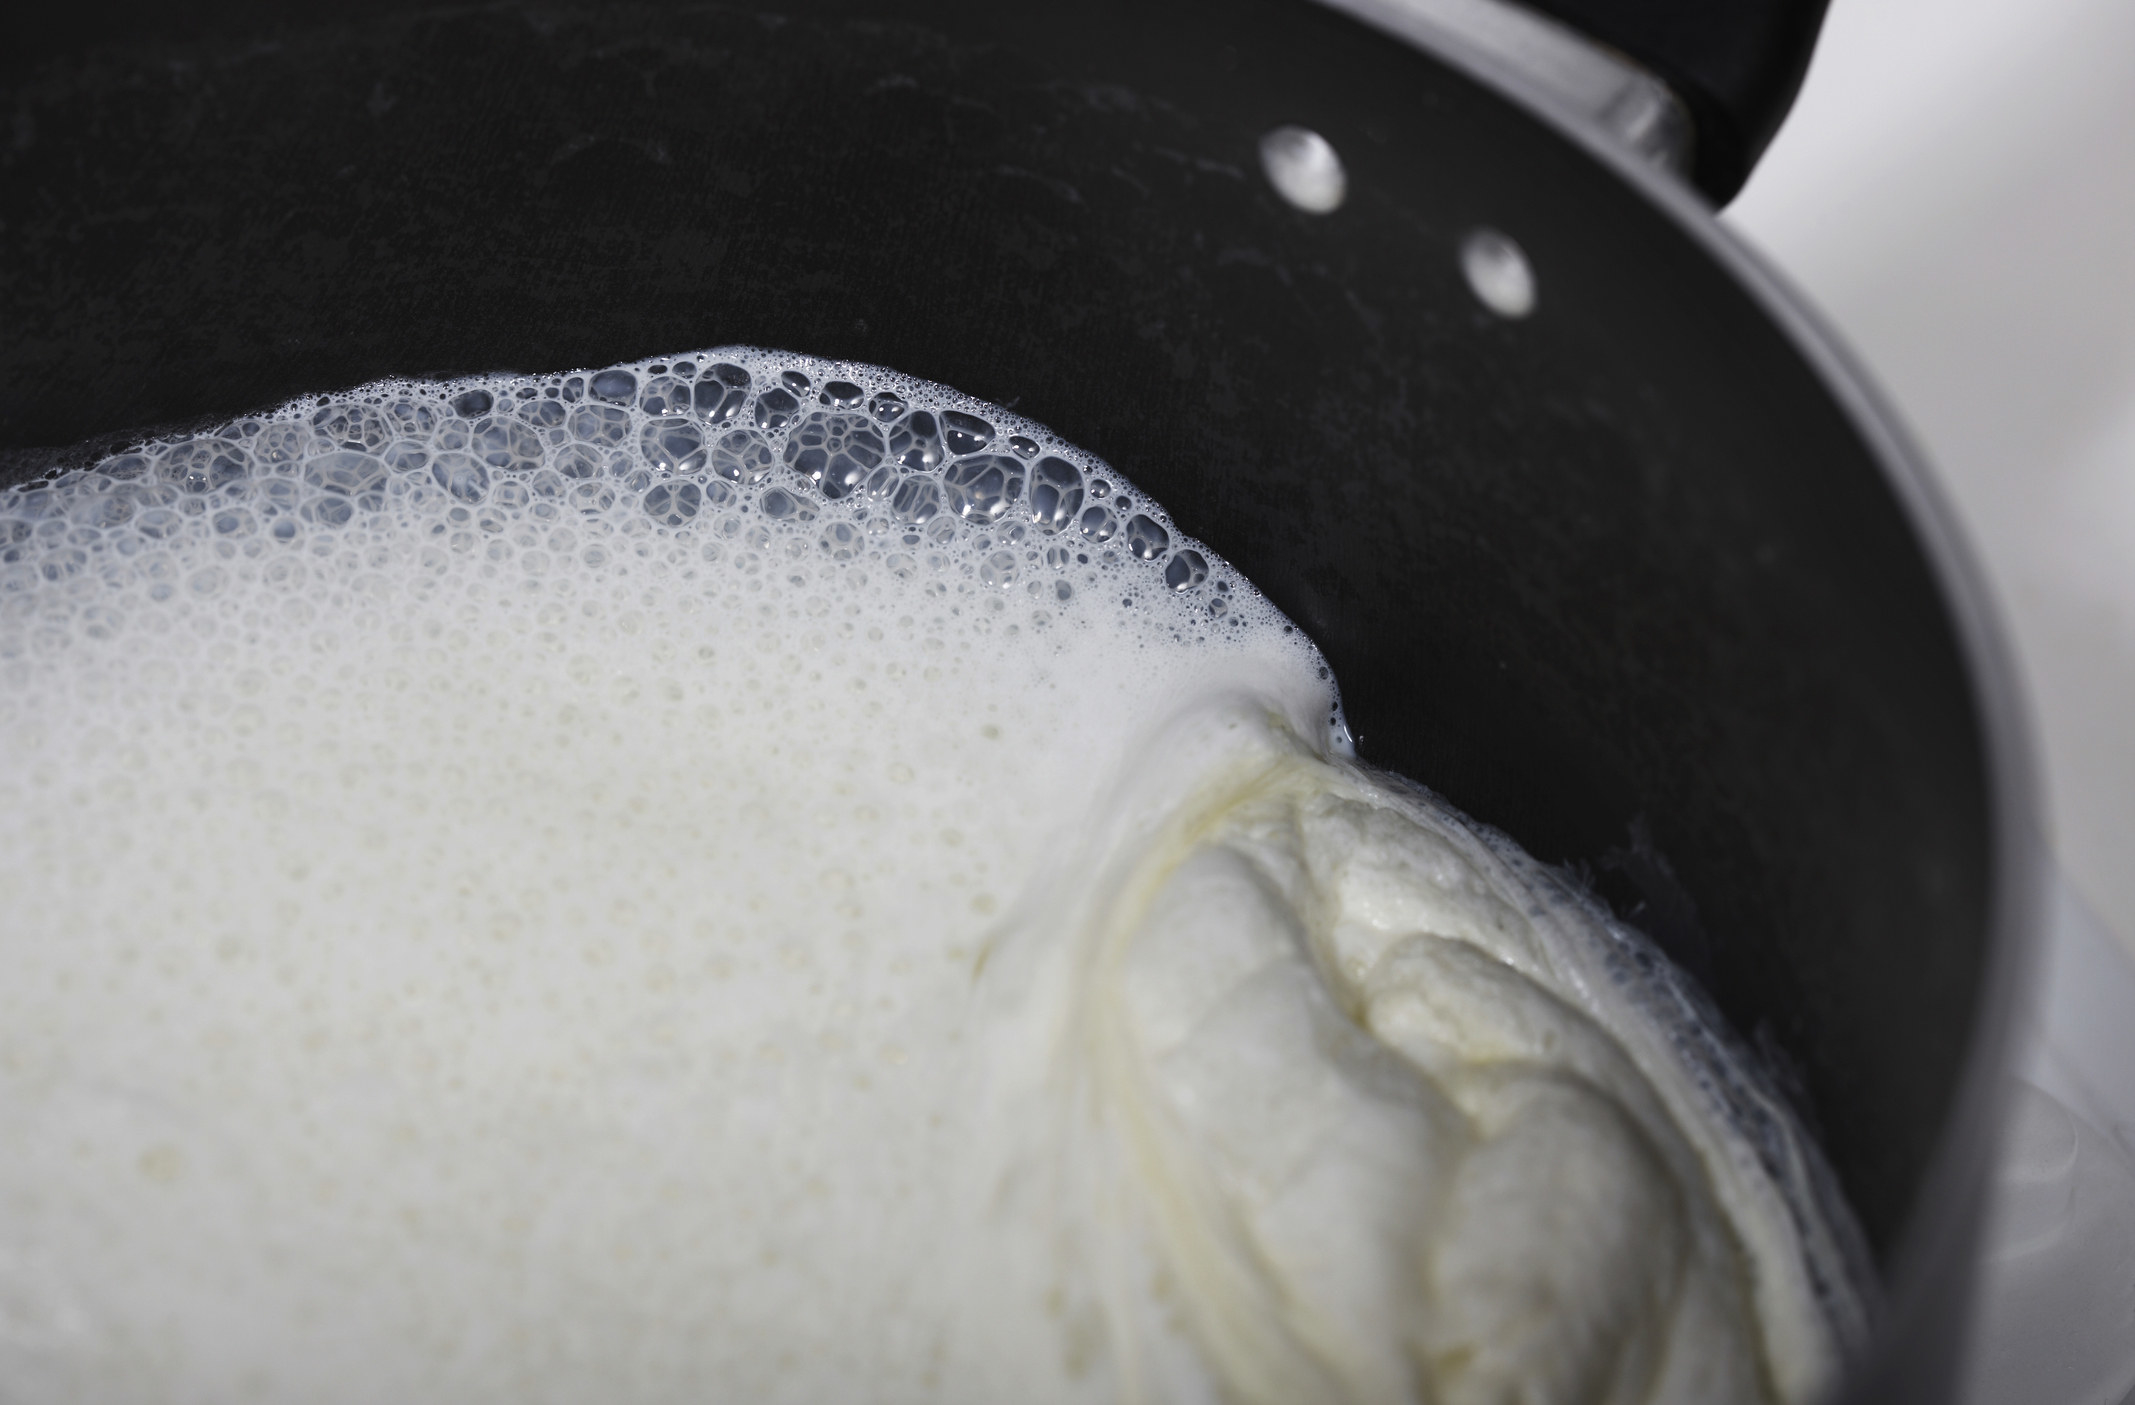 Milk boiling in a saucepan.